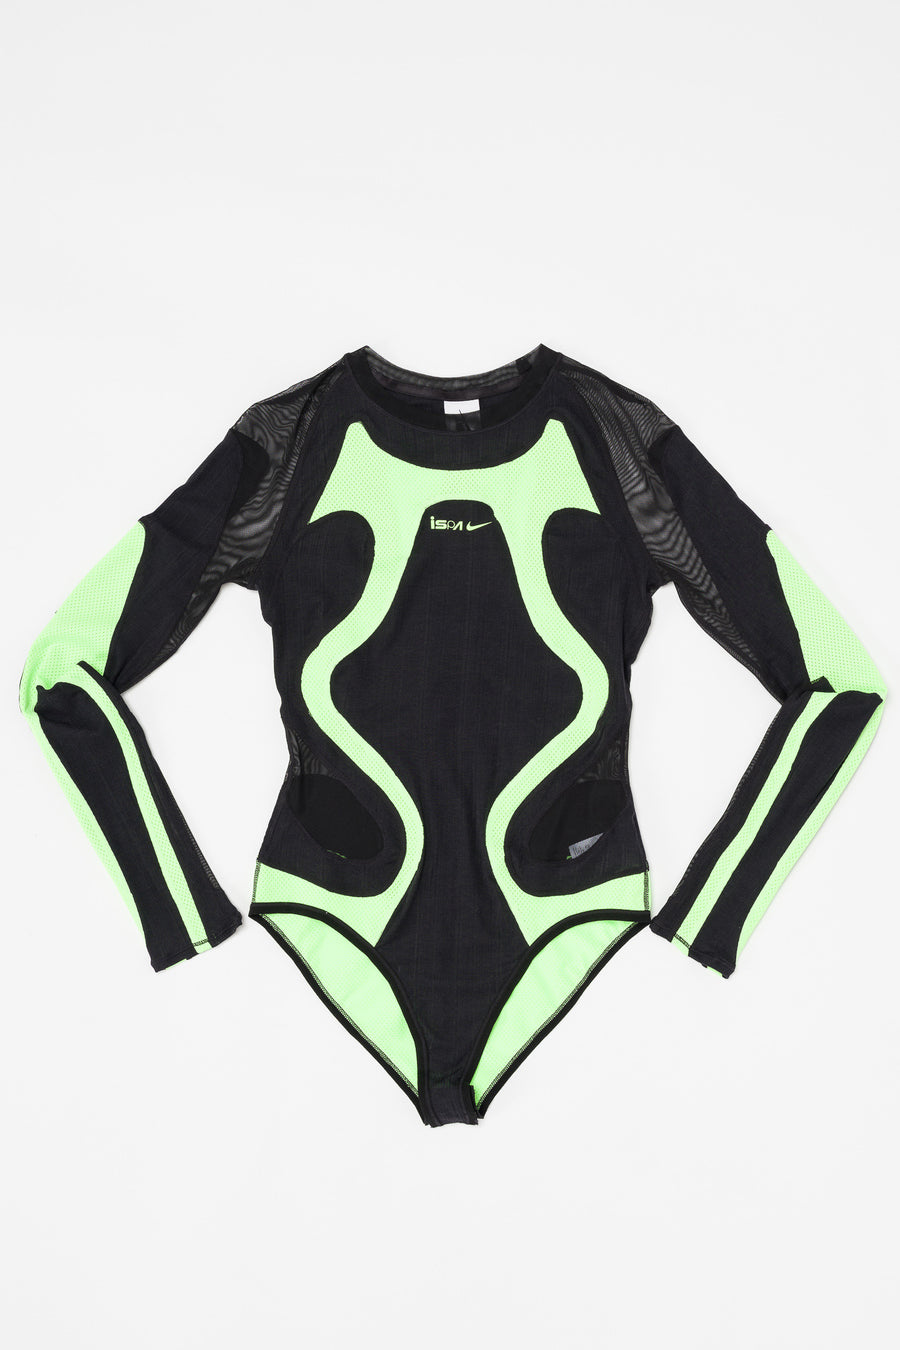 ISPA Bodysuit in Lime Blast/Black